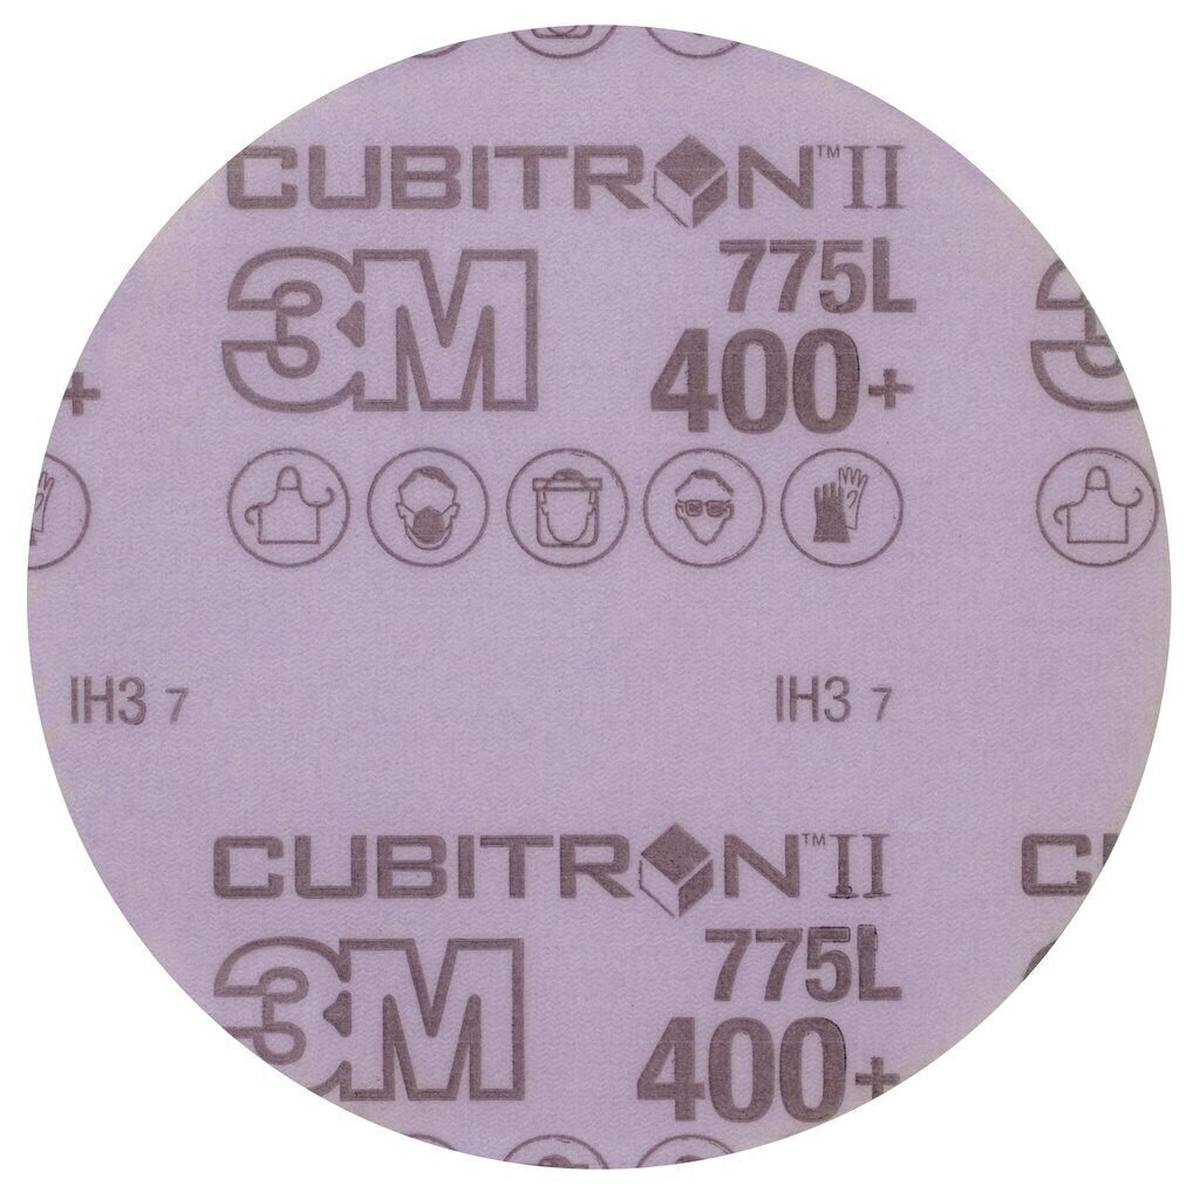 3M Cubitron II Hookit film disc 775L, 125 mm, 400+, non perforato #05055